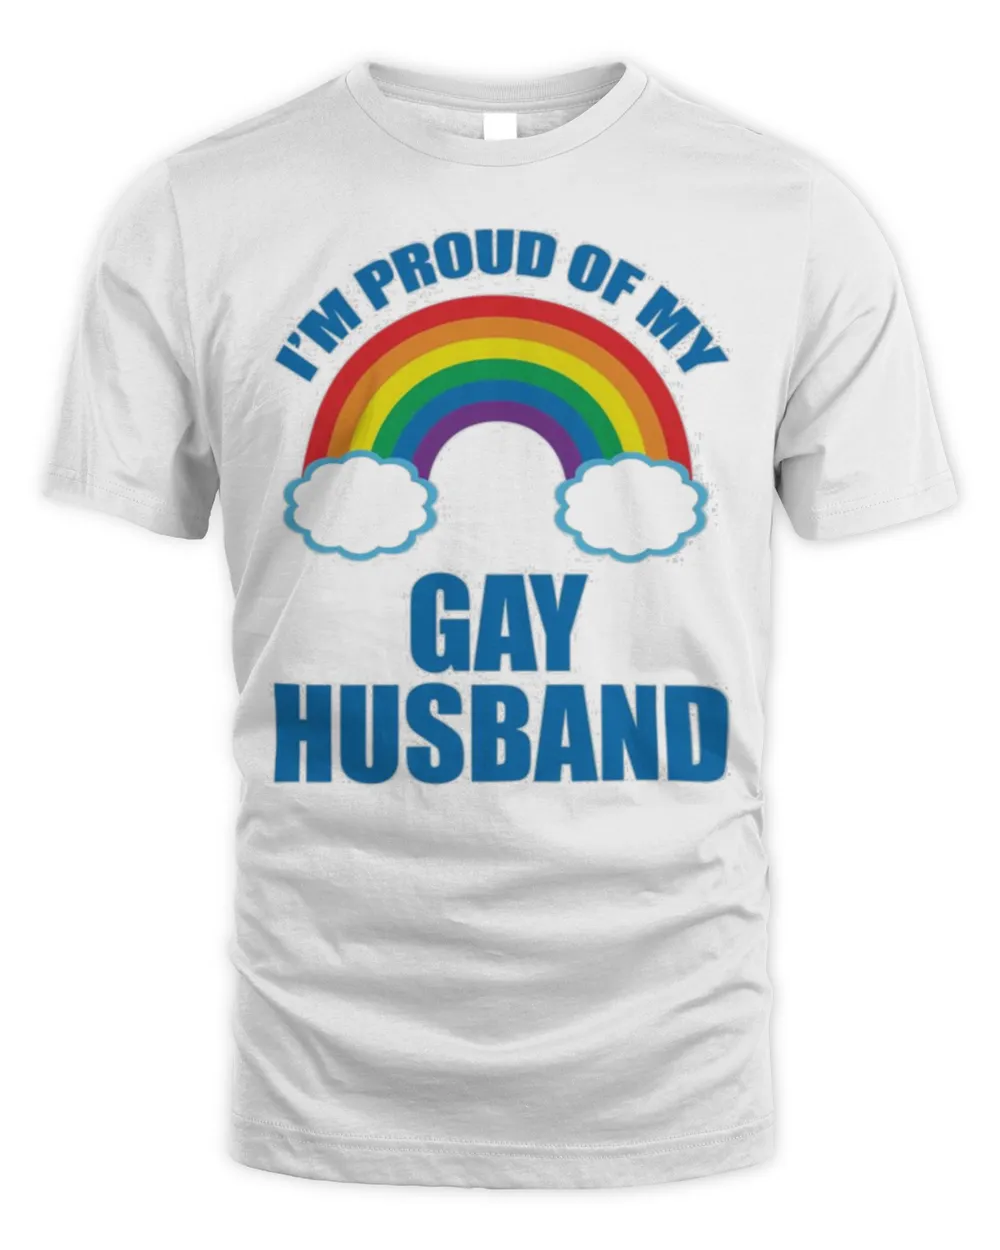 I’m proud of my gay husband shirt